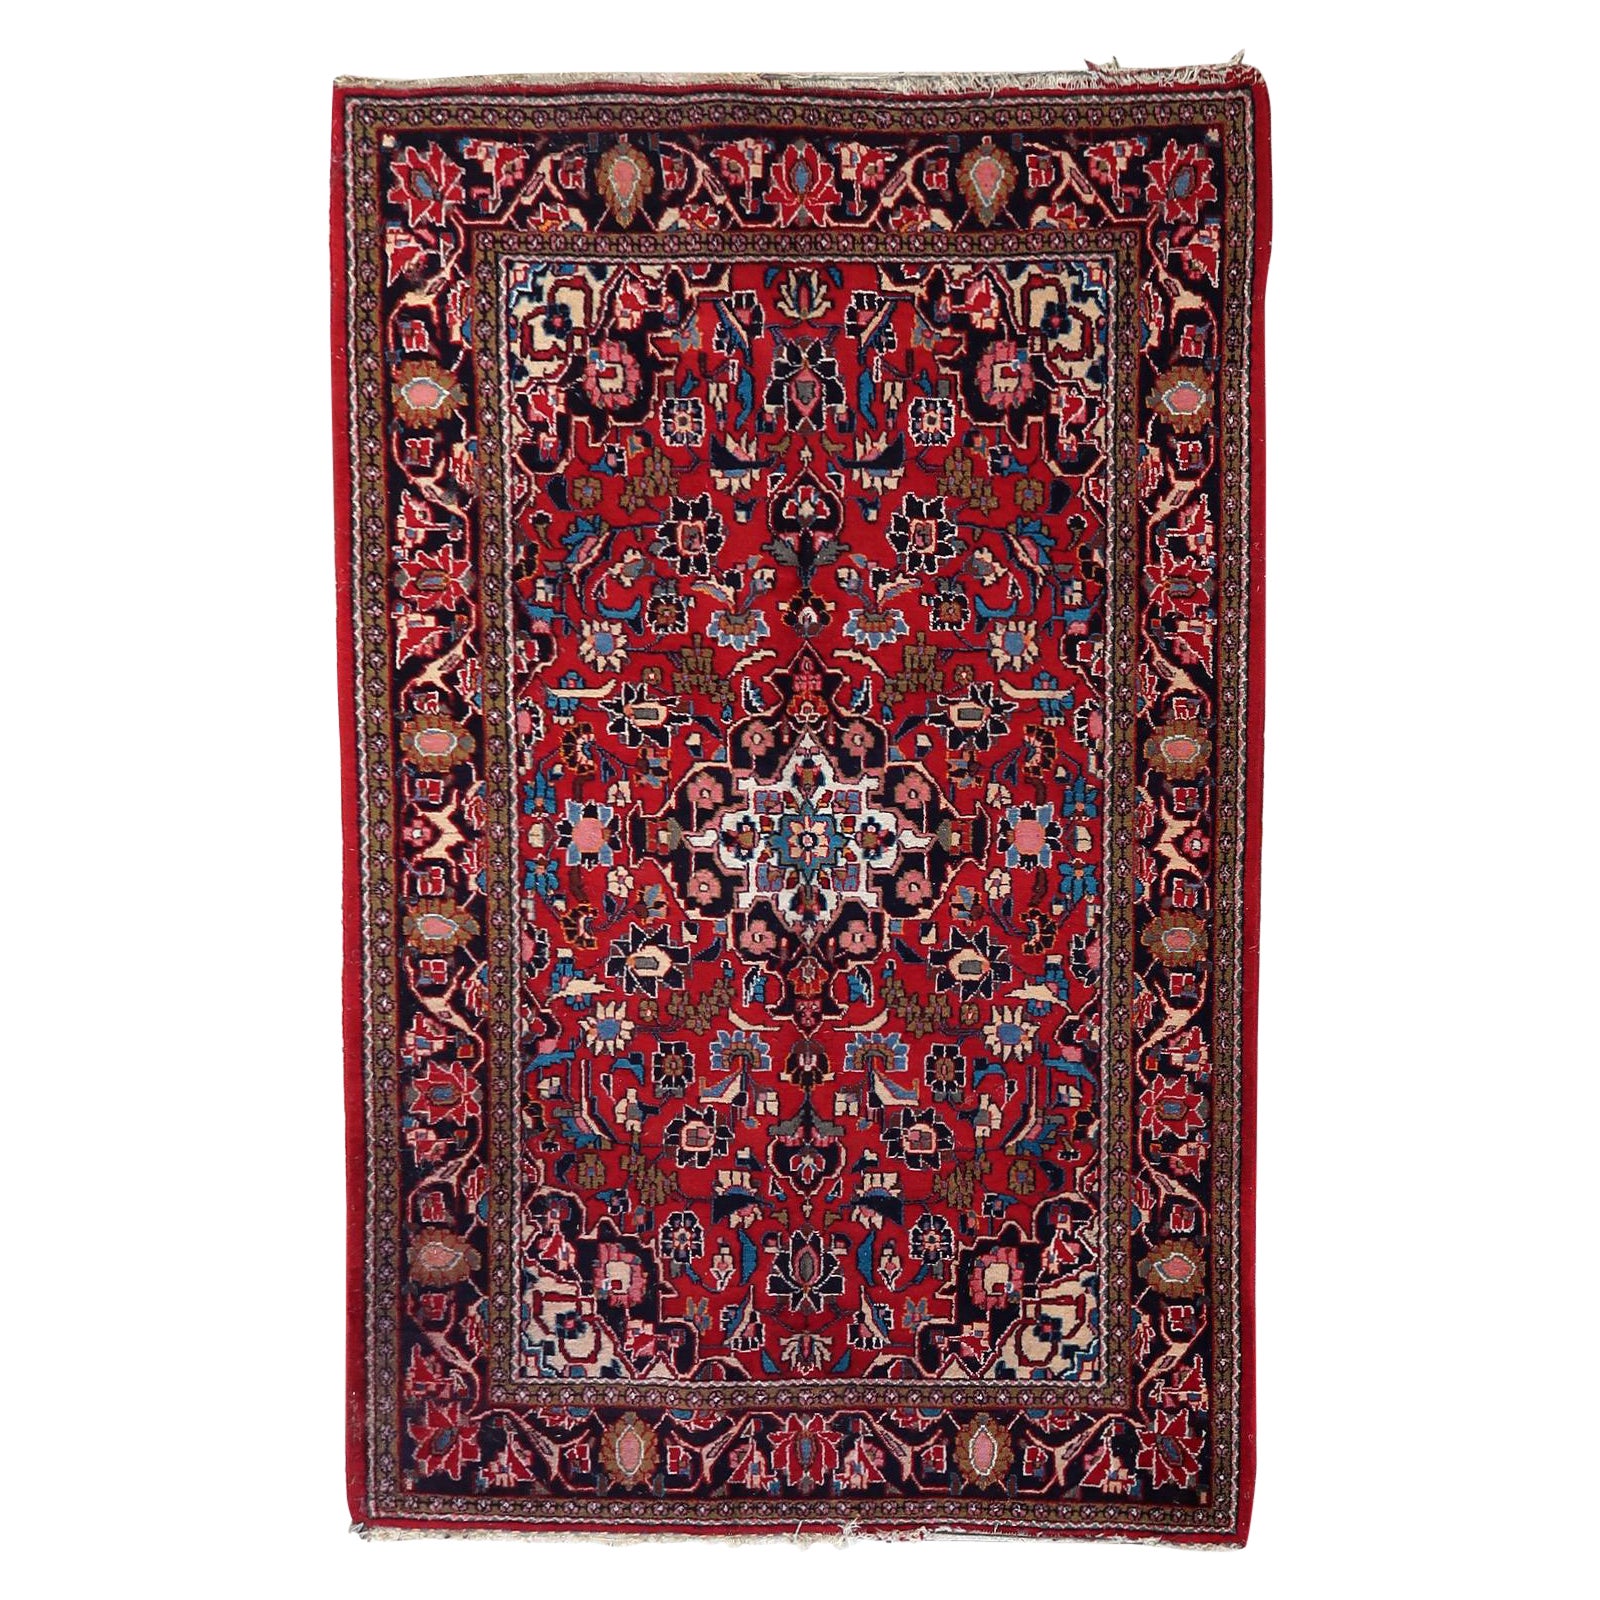 Handmade Antique Persian Style Kashan Rug 4.2' x 6.5', 1920s - 1C1119